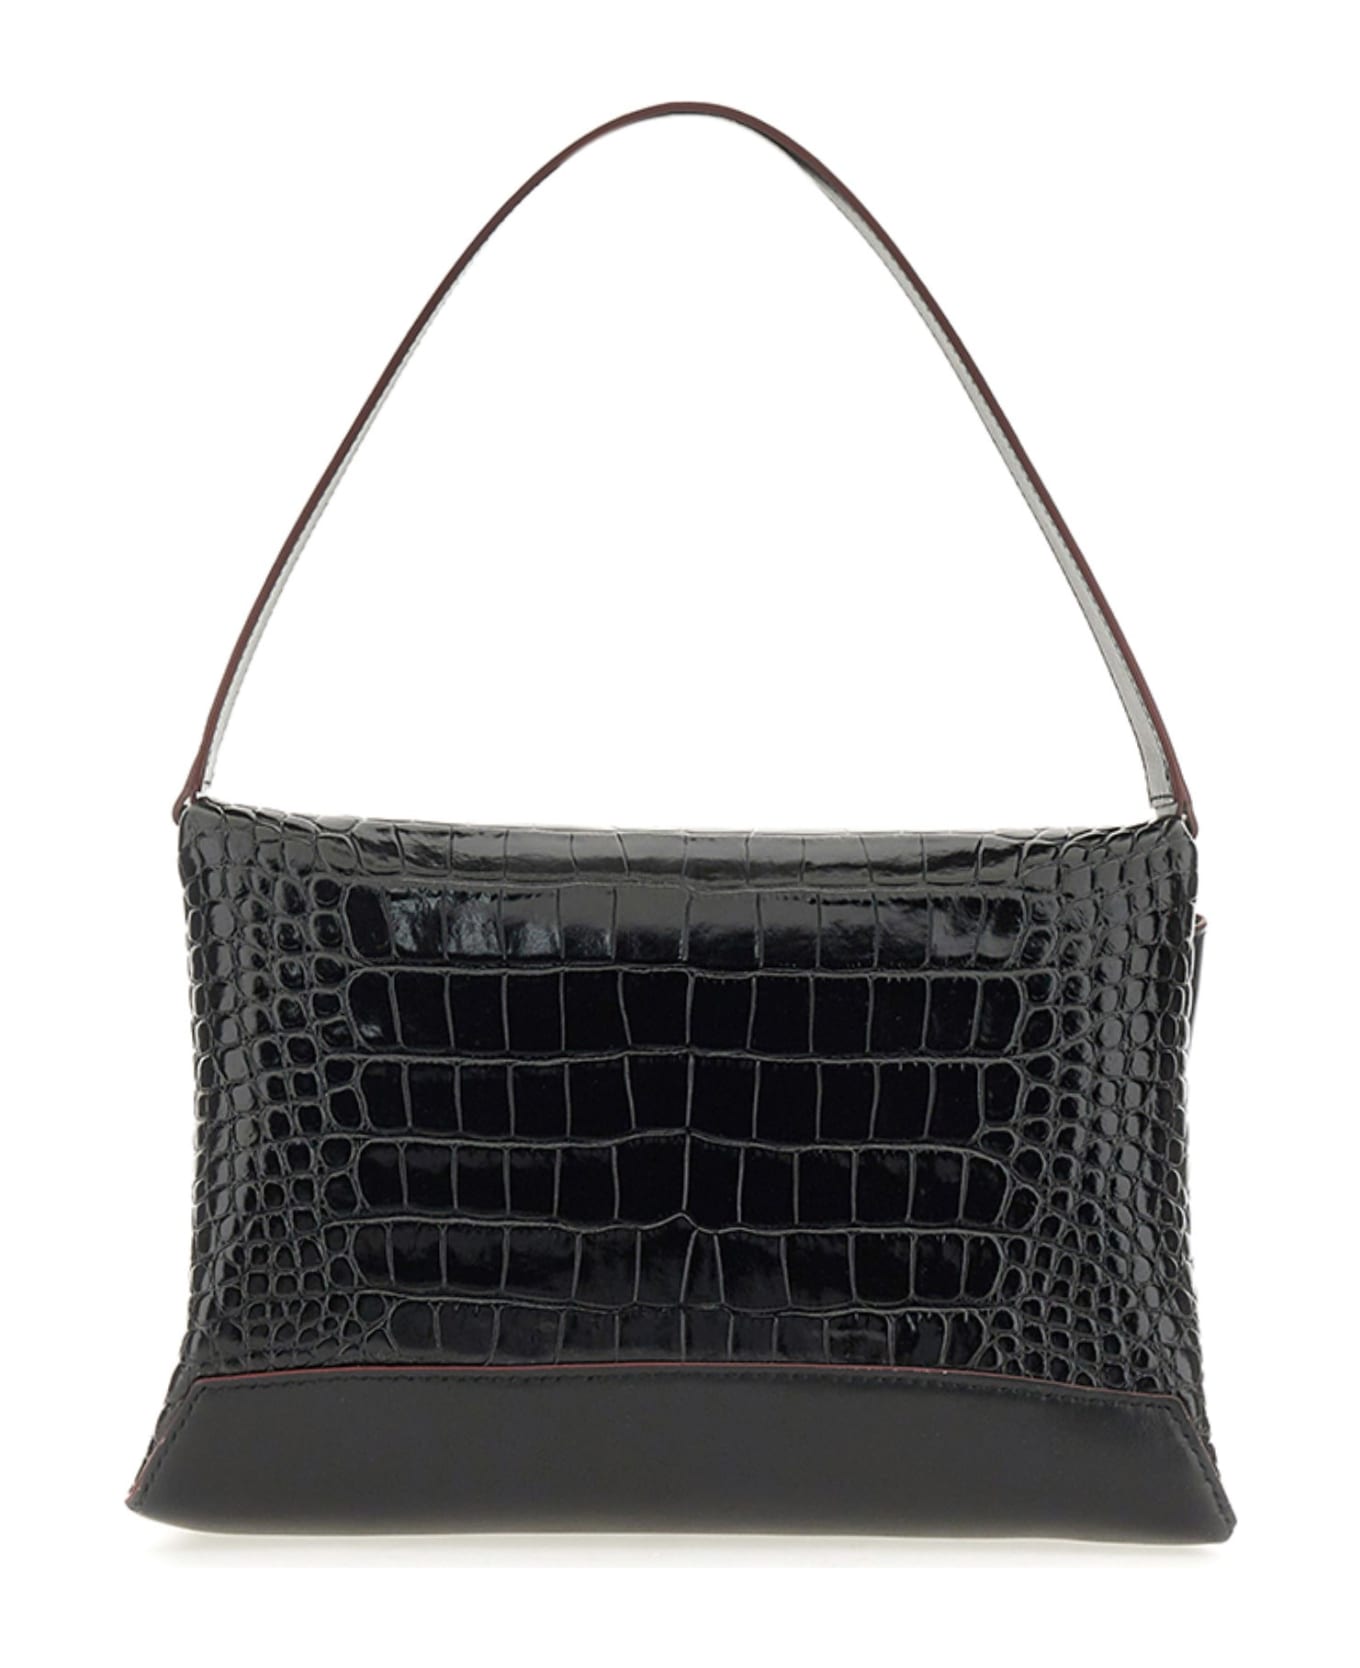 Victoria Beckham Clutch Bag With Chain - BLACK トートバッグ